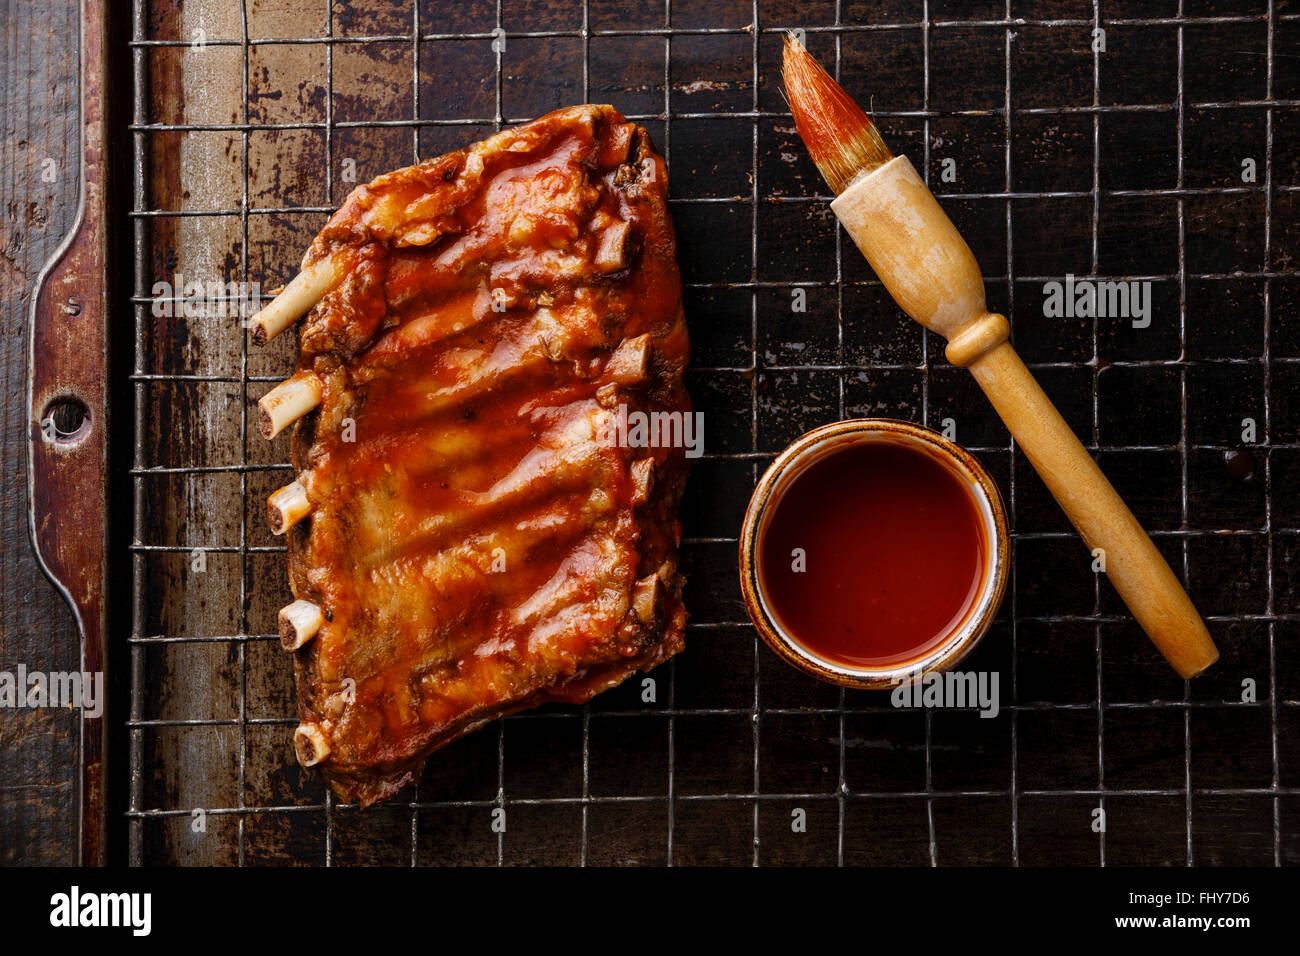 BBQ grilled smoked pork ribs and sauce brush on dark metal baking sheet background Stock Photo